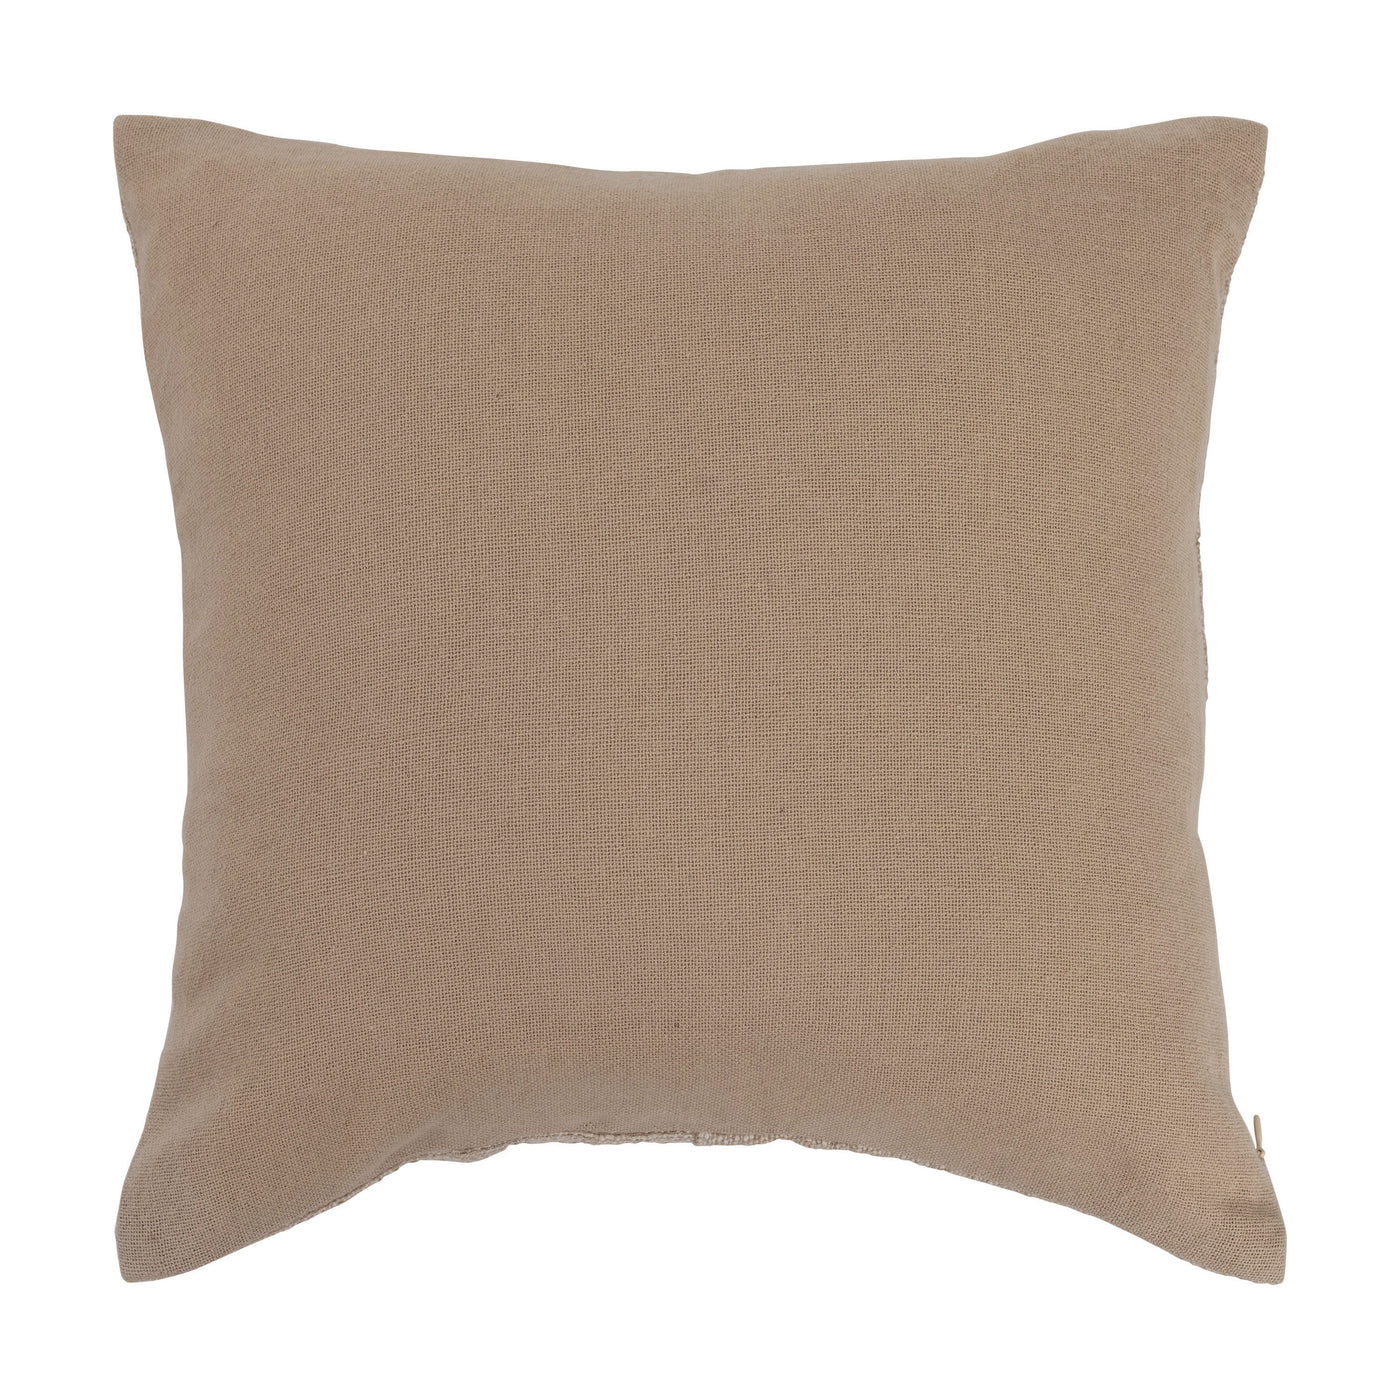 Pillow, Abode - Danshire Market and Design 